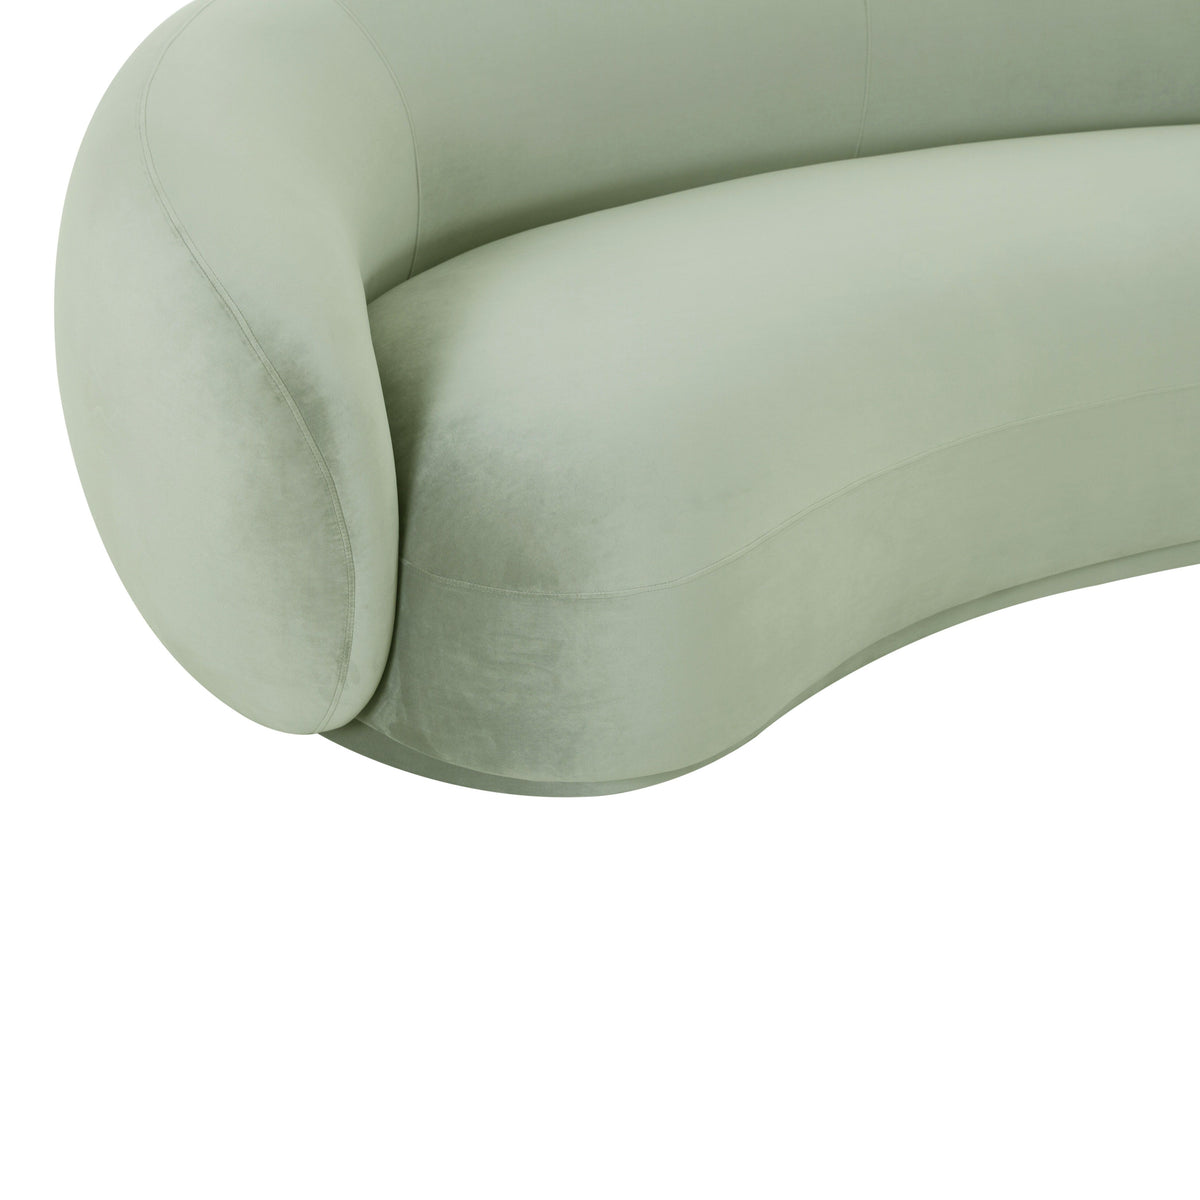 Coty Moss Green Velvet Sofa - Luxury Living Collection